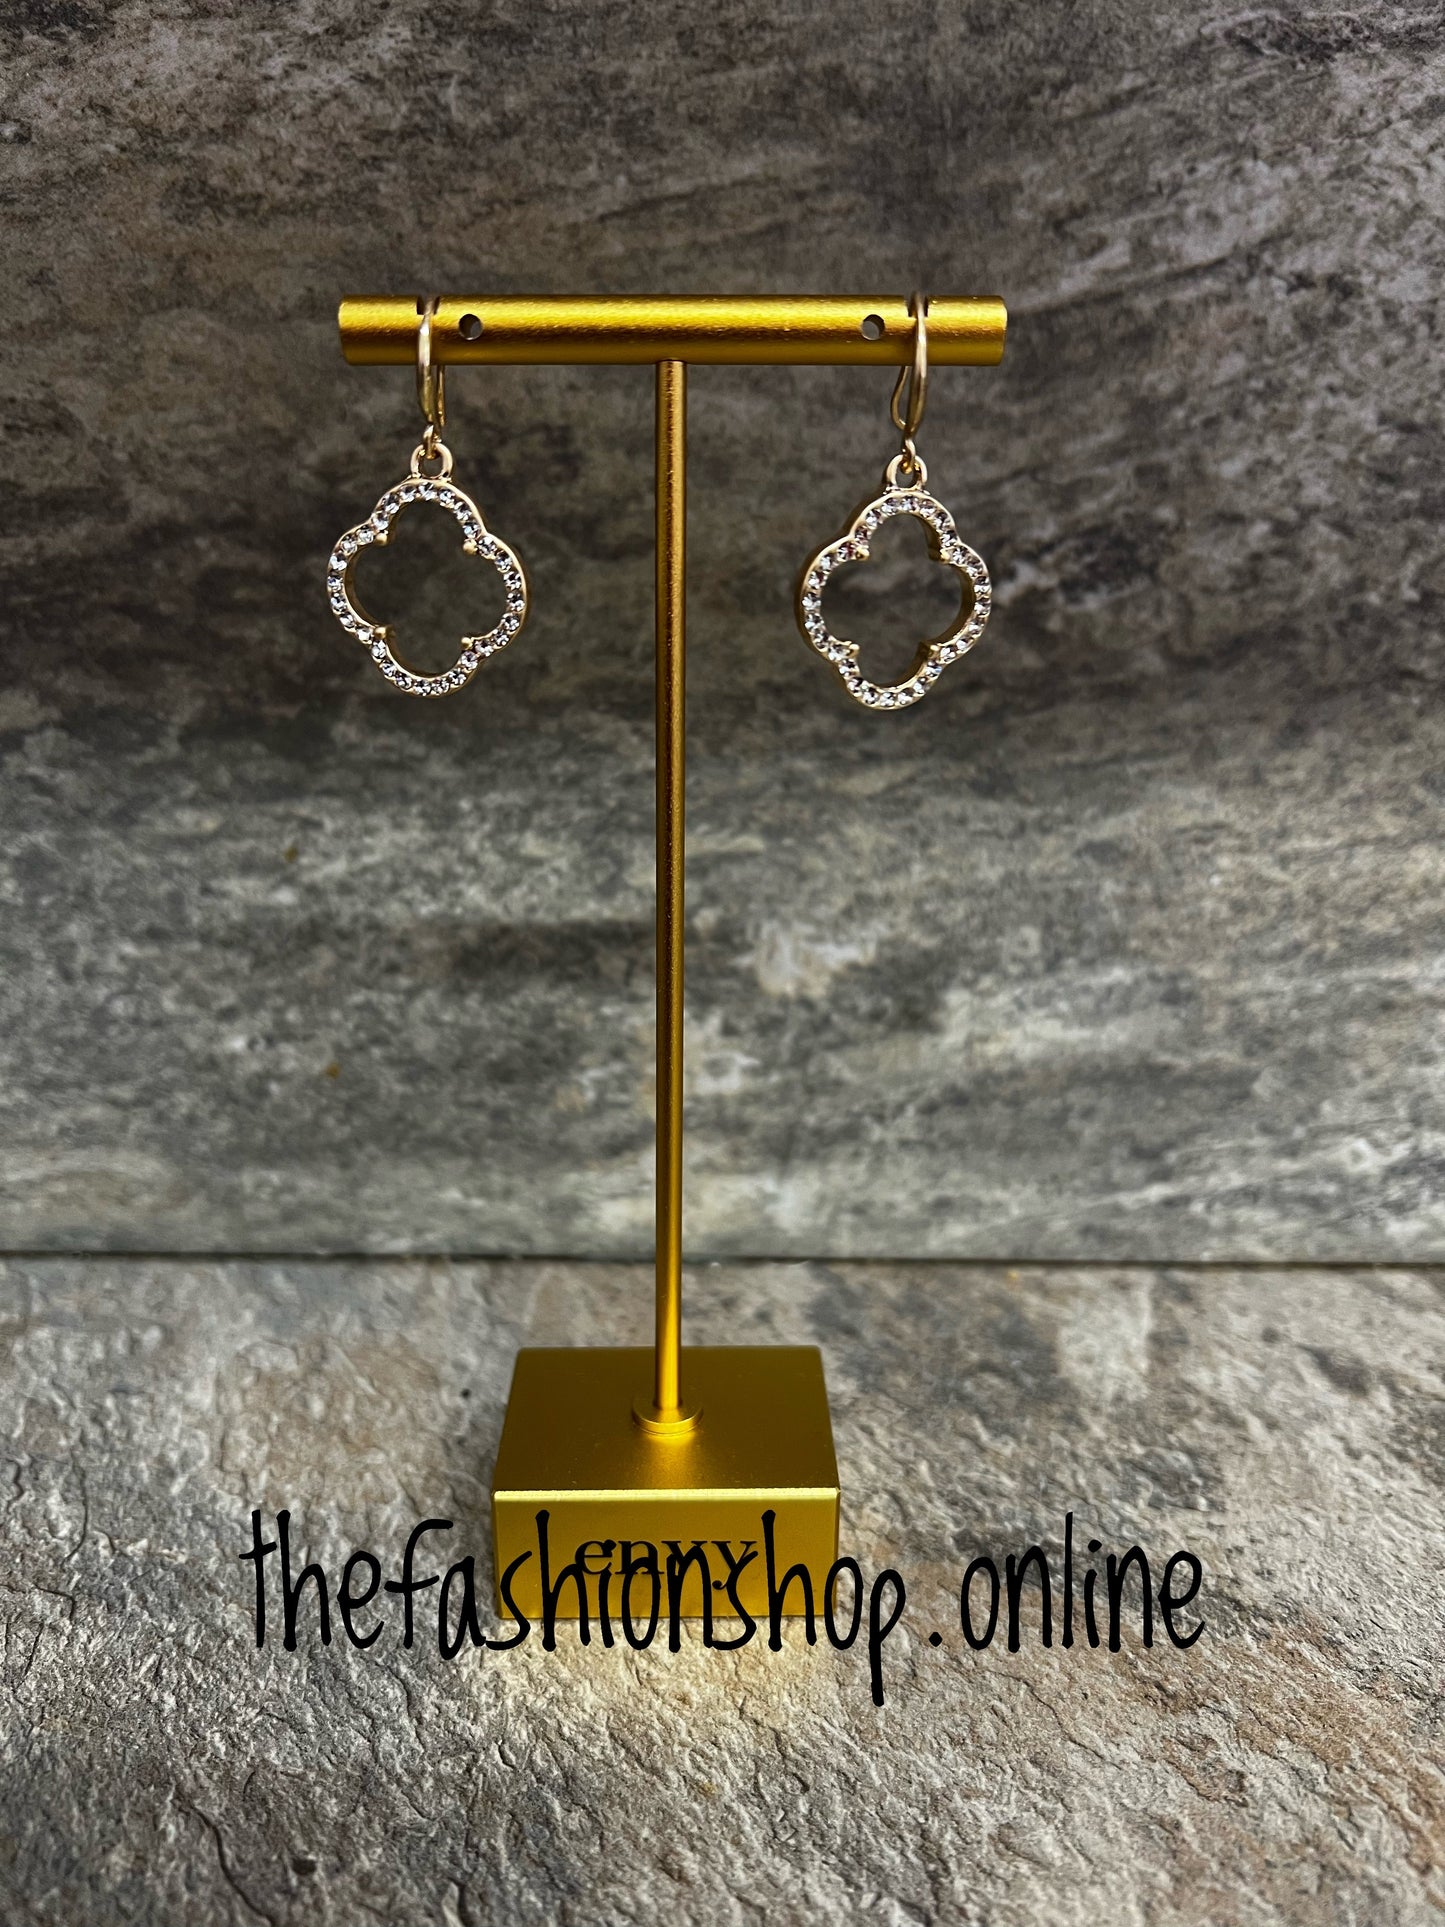 Envy gold crystal clover drop earrings